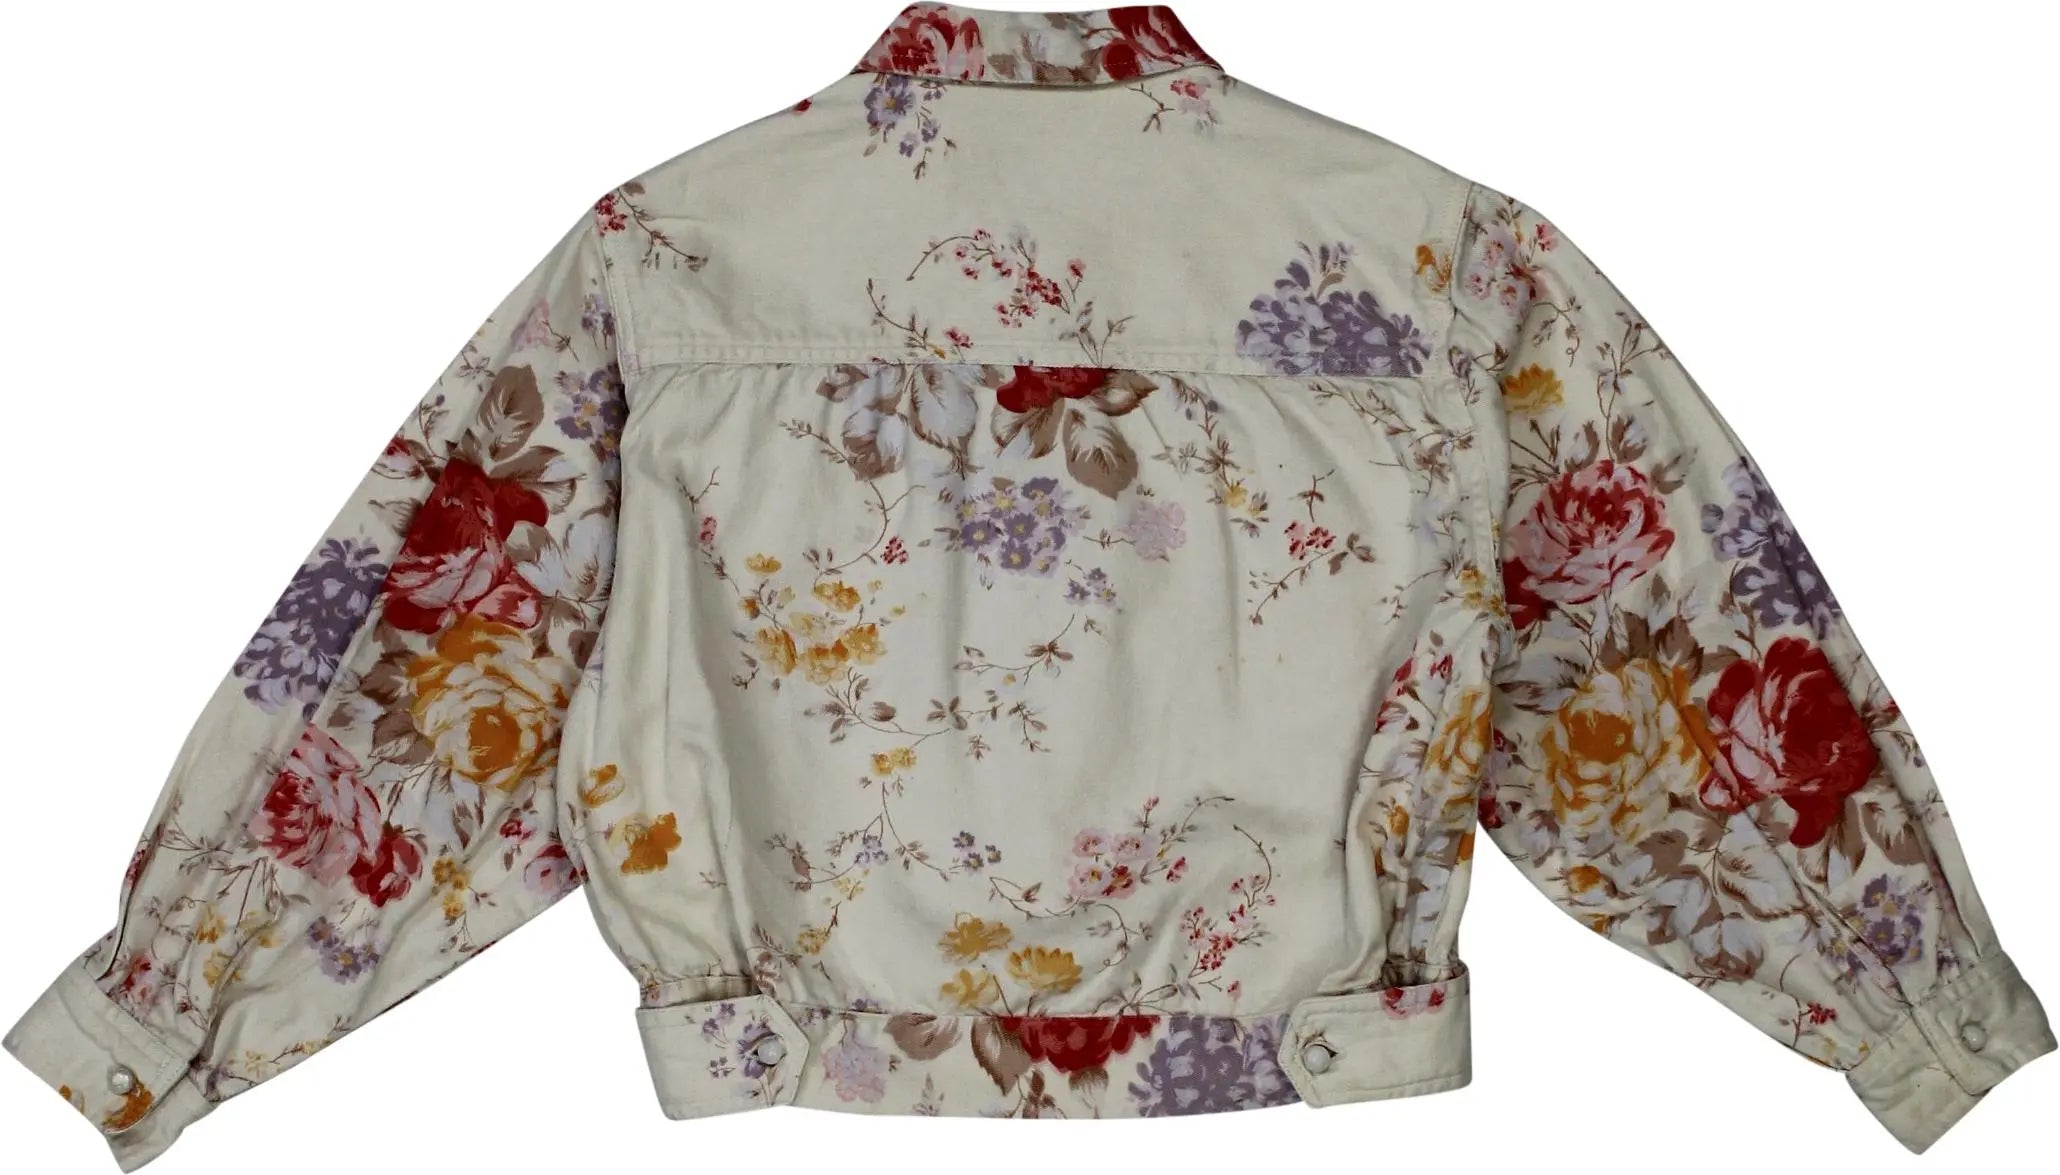 Anniverdi - Floral Denim Jacket- ThriftTale.com - Vintage and second handclothing